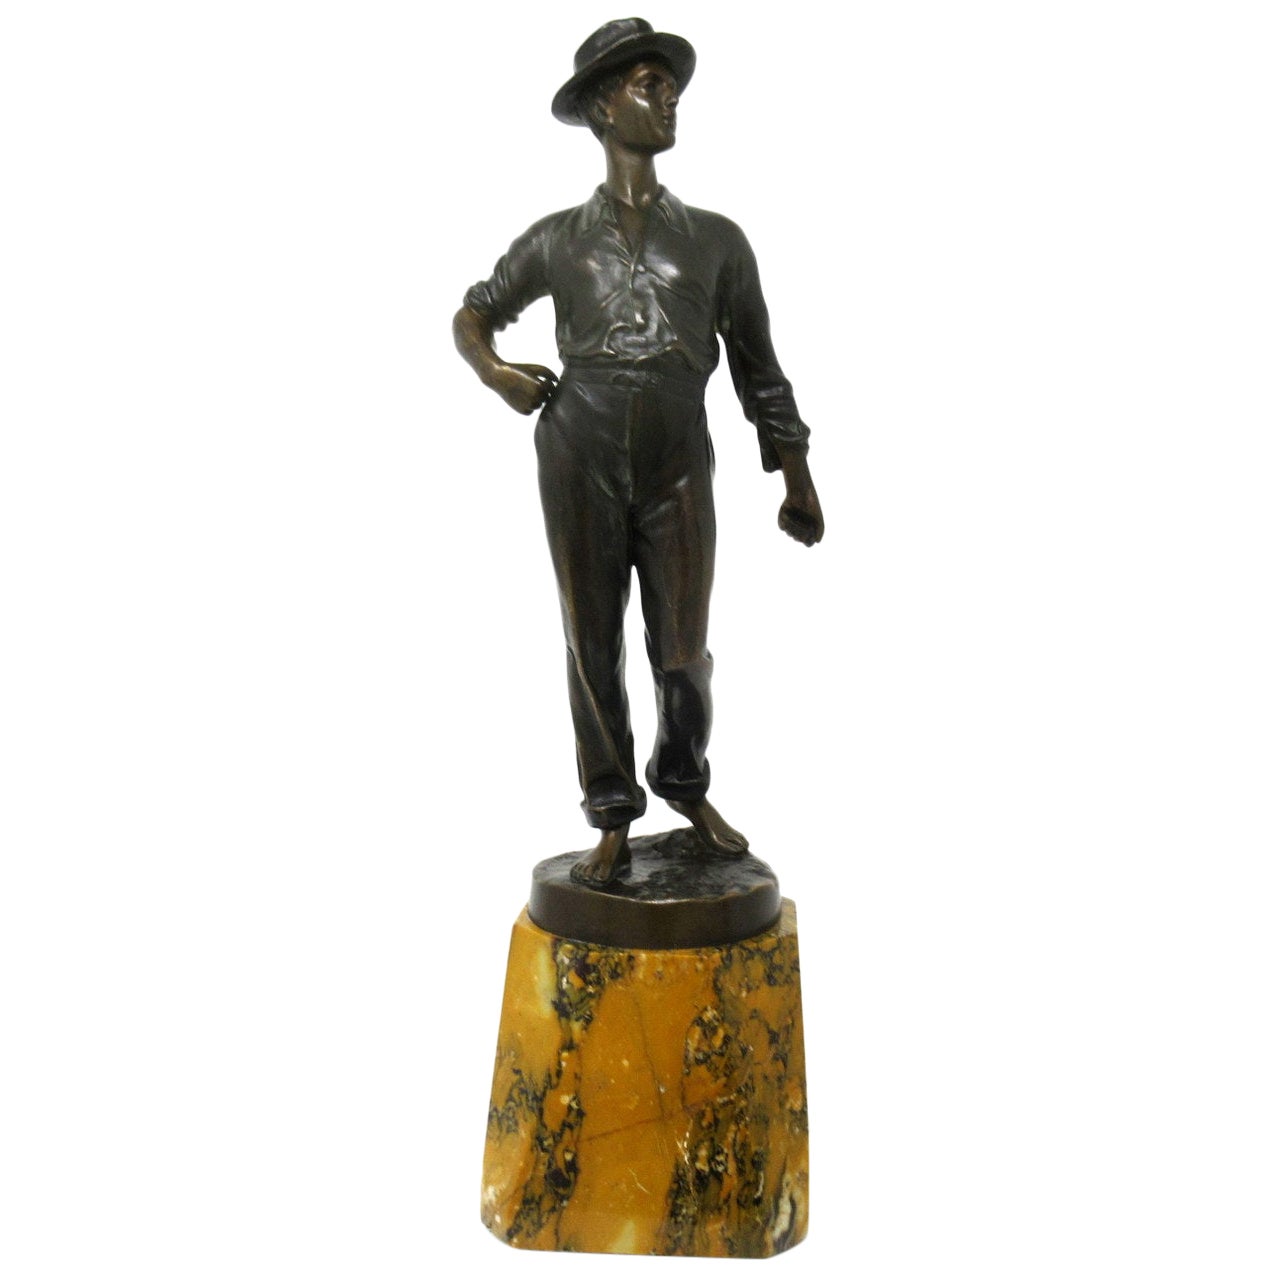 Antique German Bronze Male Boy Figure Sienna Marble Constantin Holand Art Deco